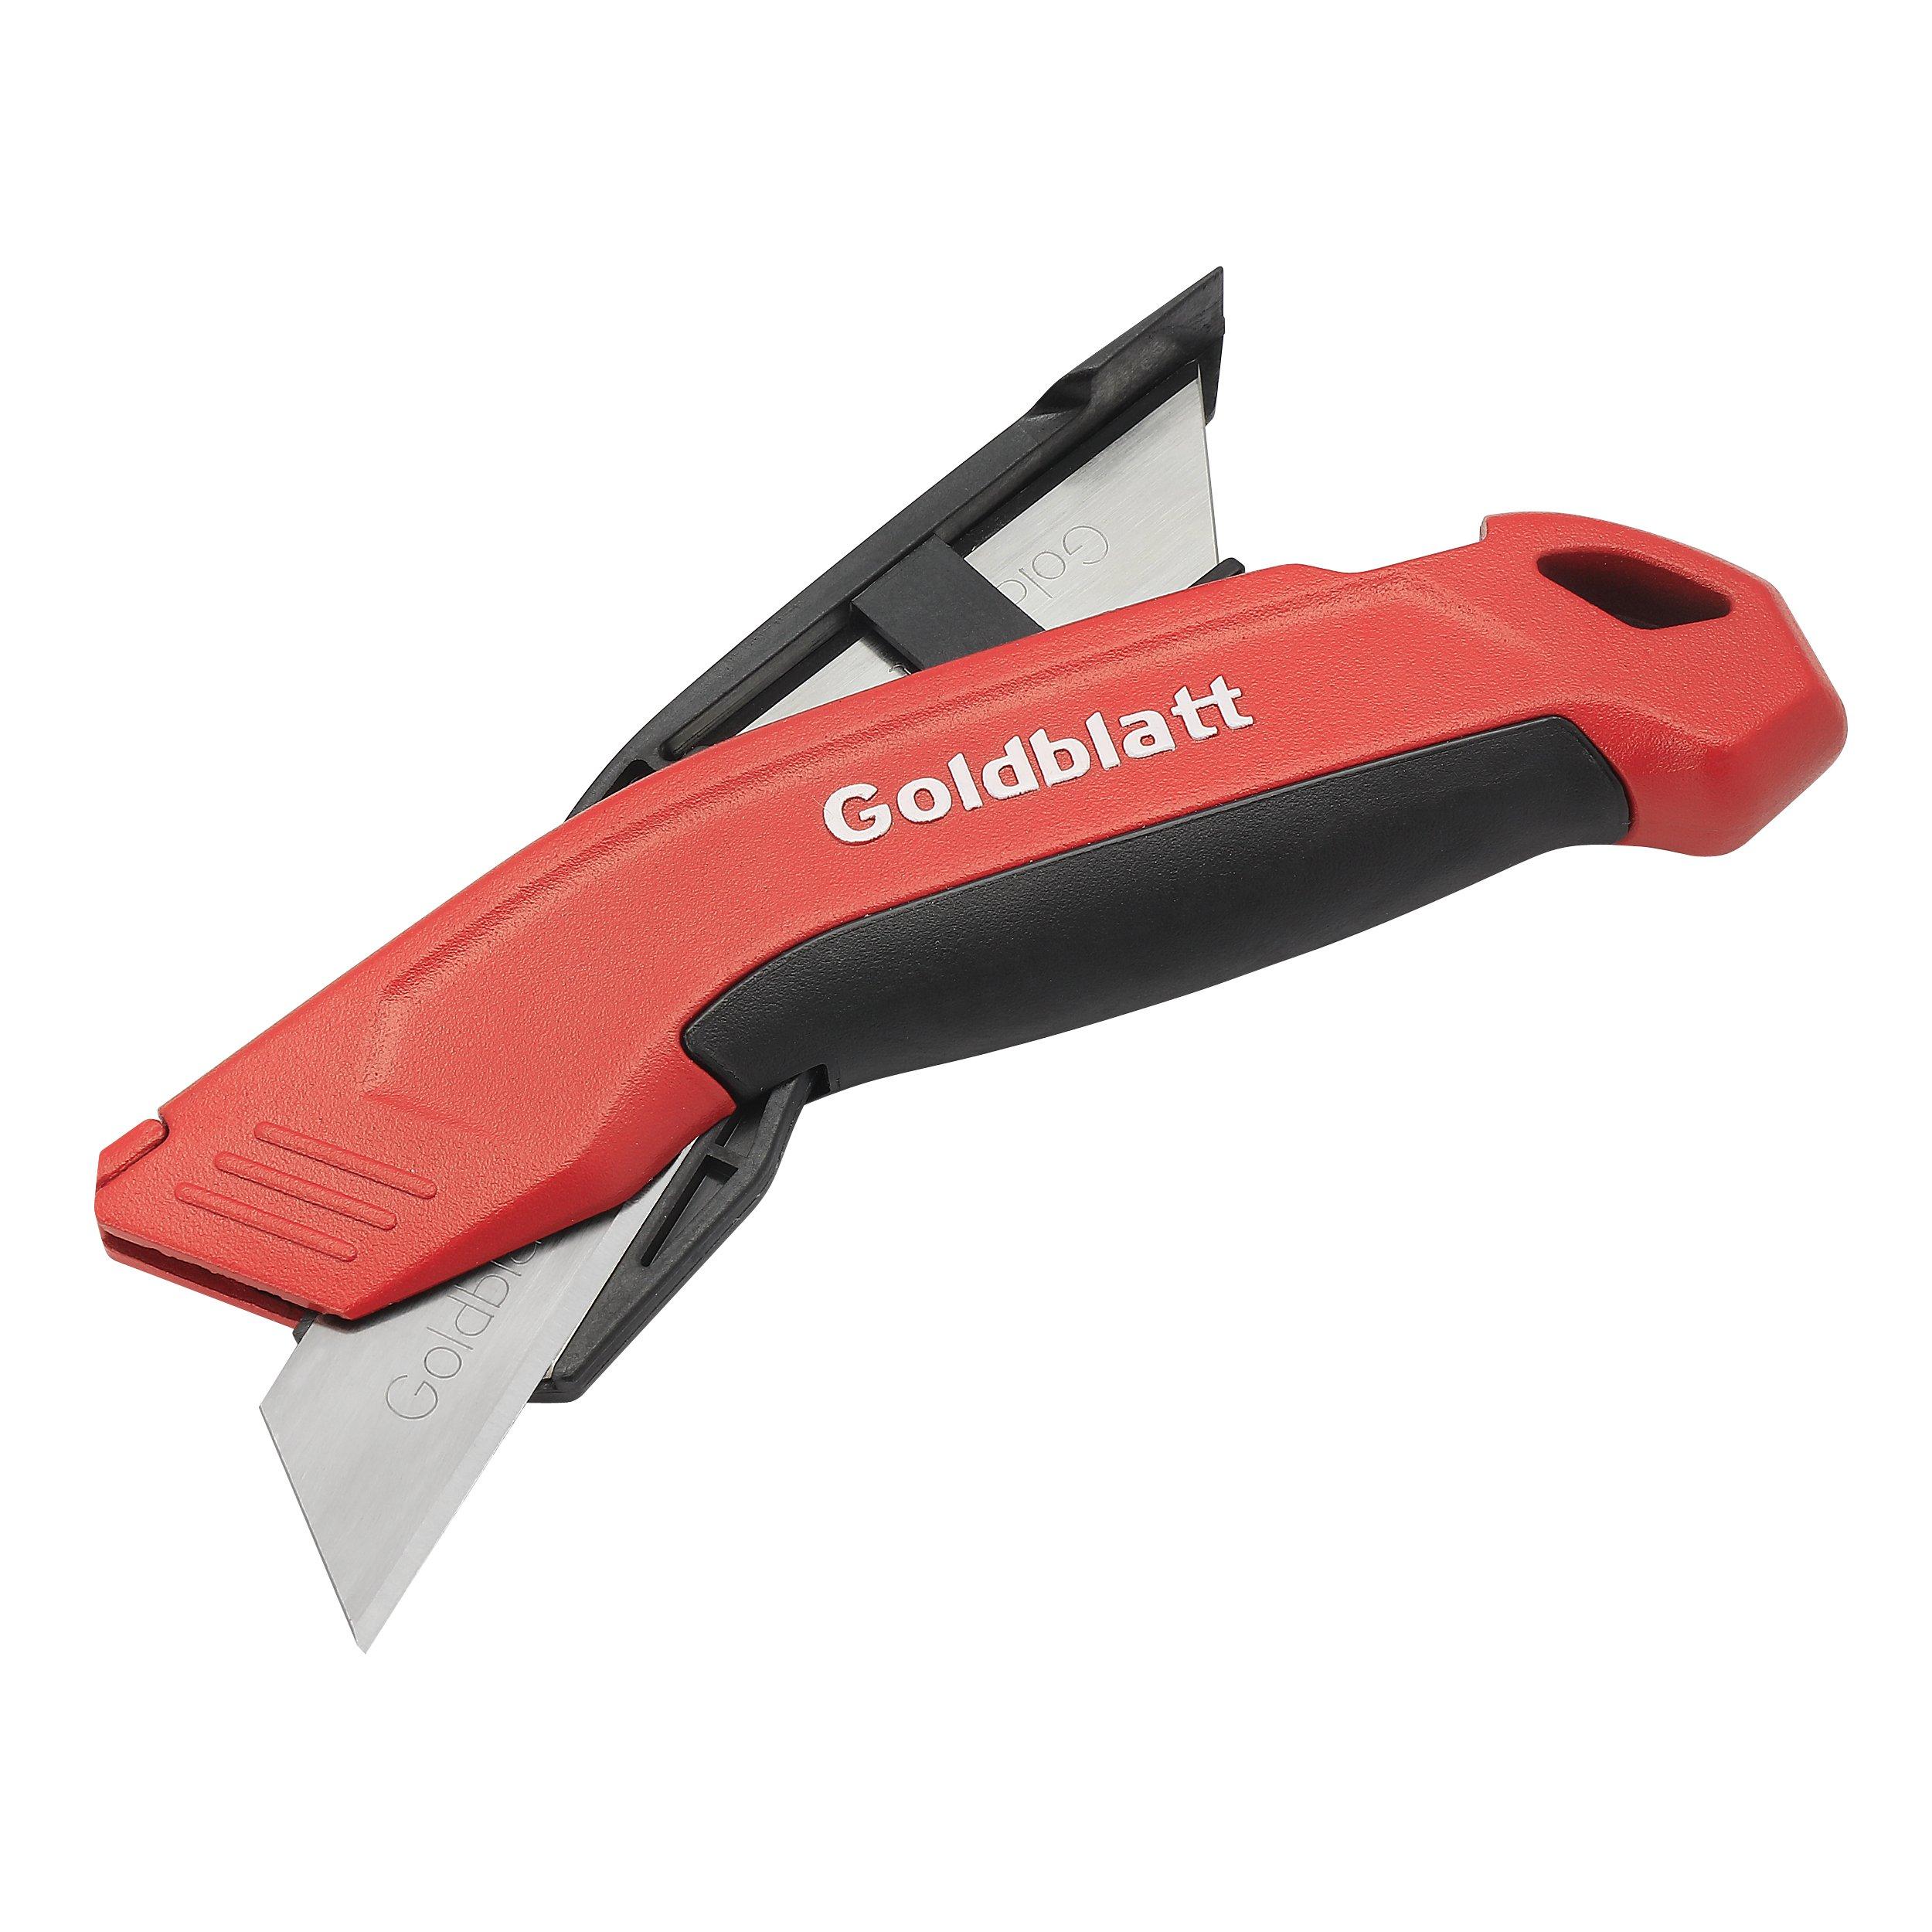 Goldblatt Quick Change Fixed Blade Utility Knife